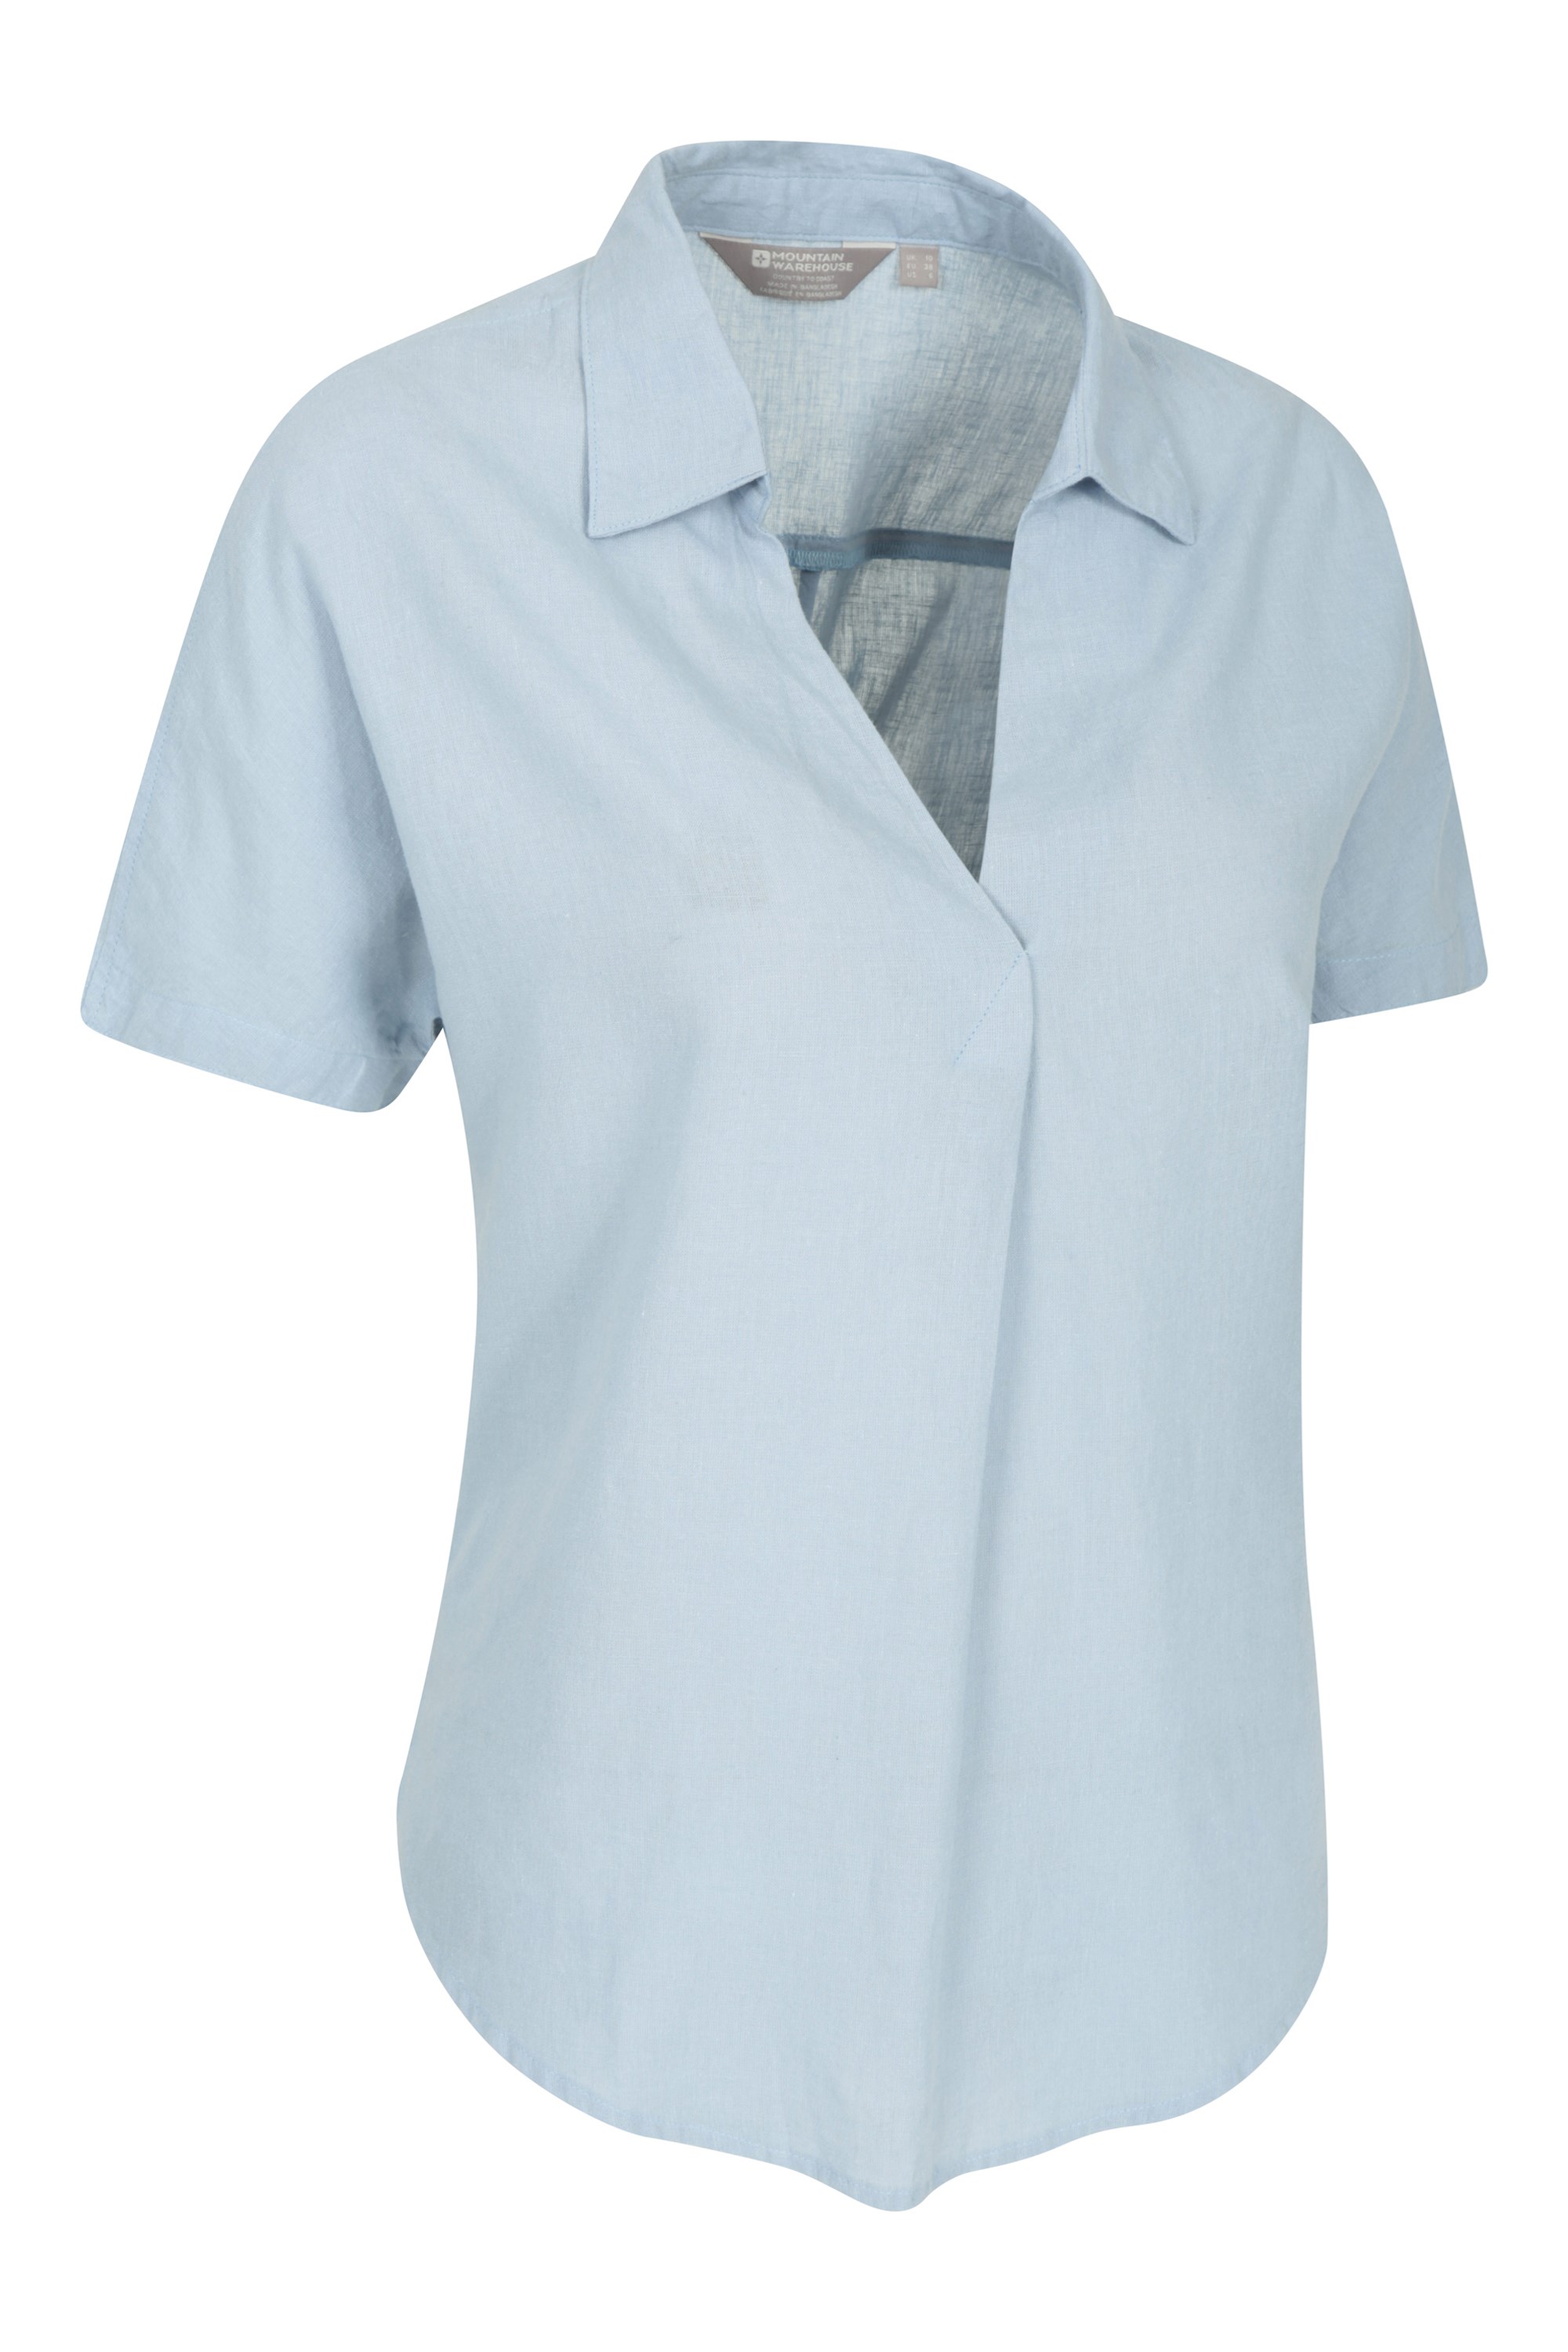 Mountain Warehouse Lounge Long Linen Womens Shirt Ladies Summer Top